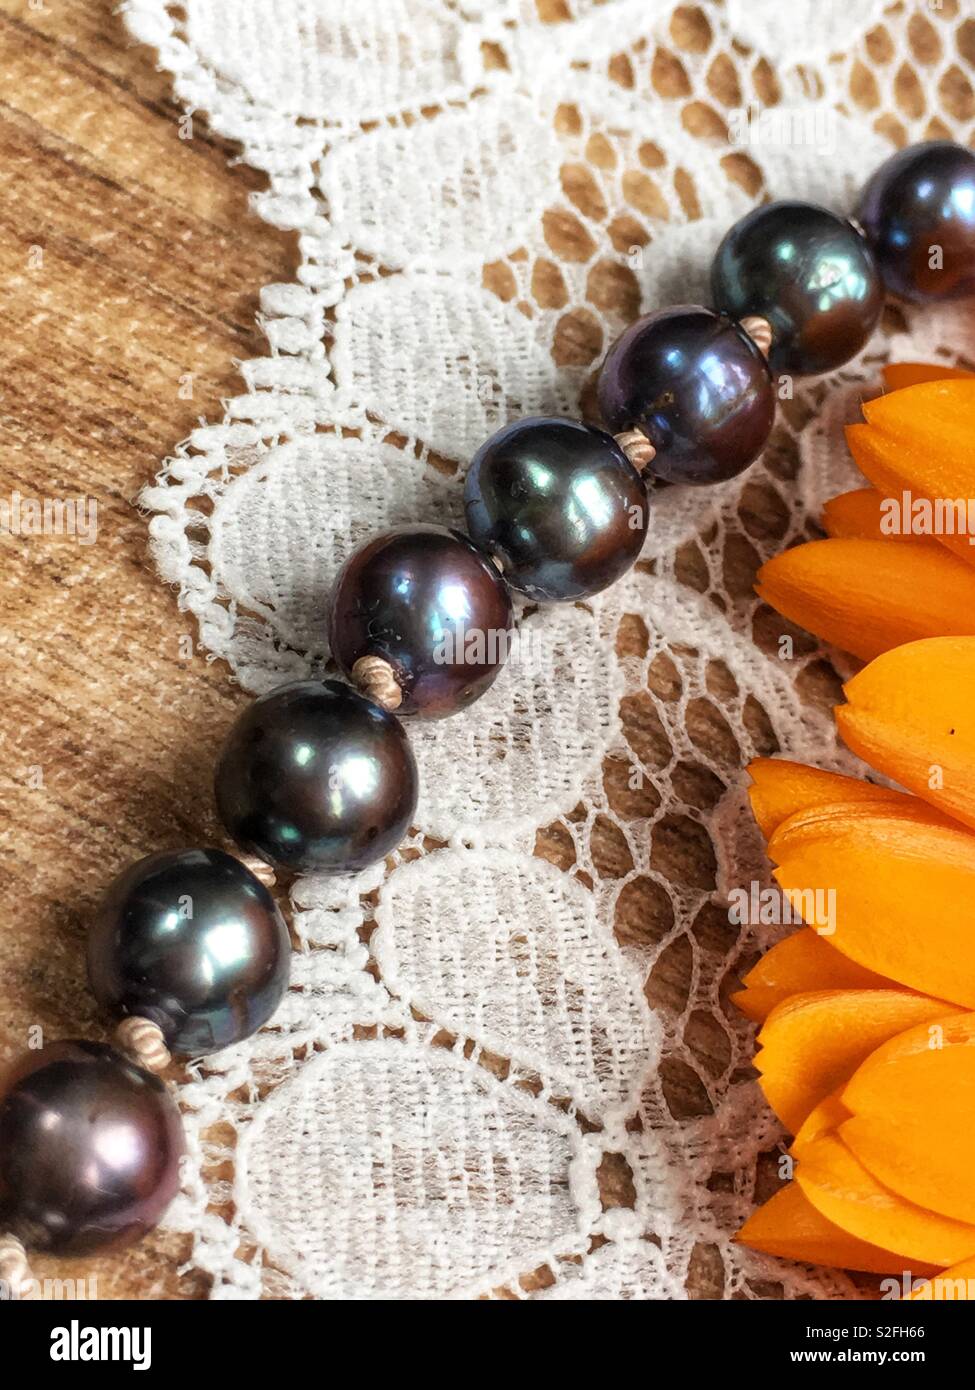 Freshwater Black Pearl Beads  Irregular Freshwater Pearls